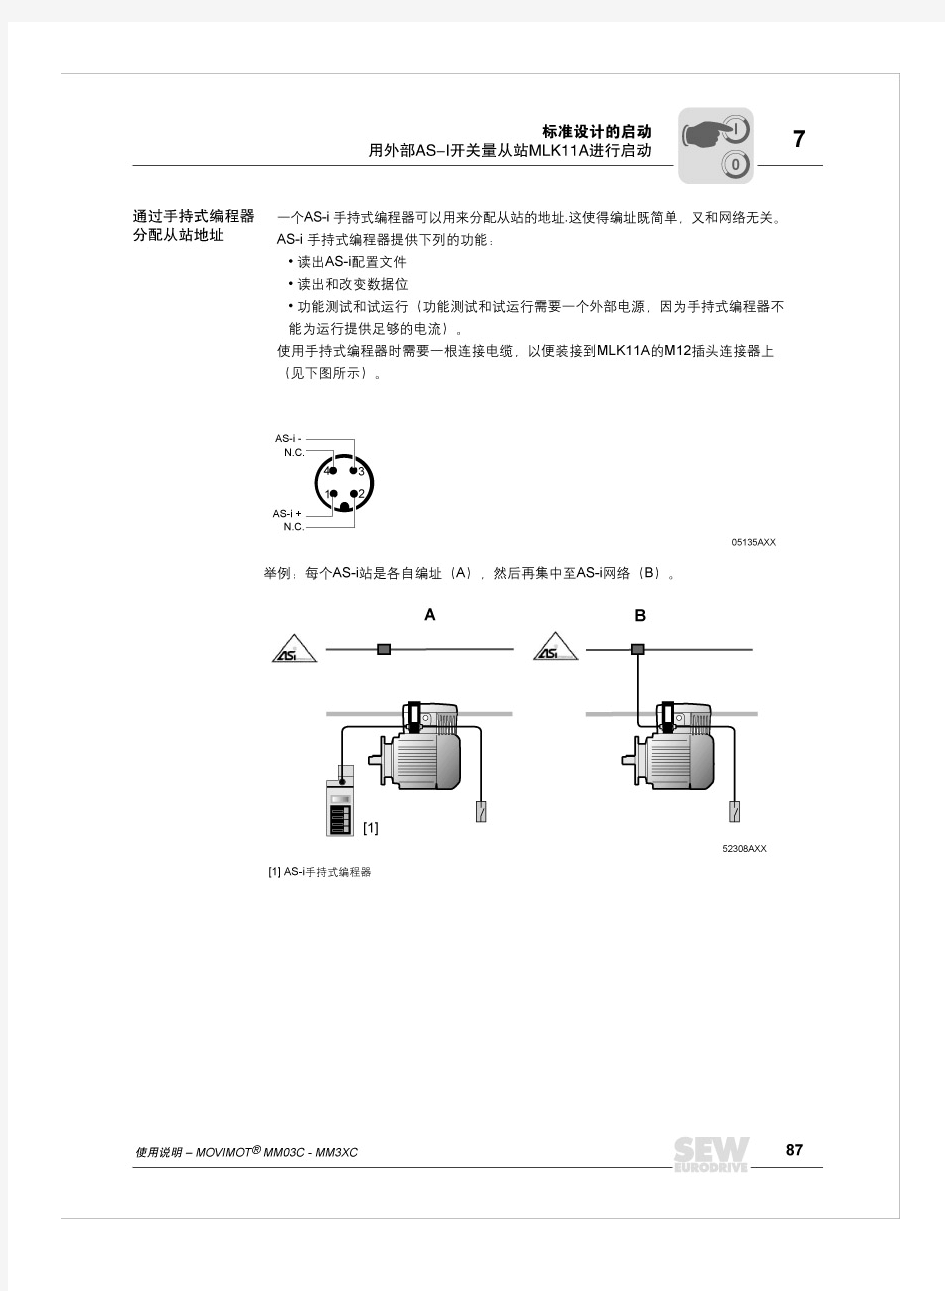 SEW MOVIMOT 变频一体机中文操作手册-2